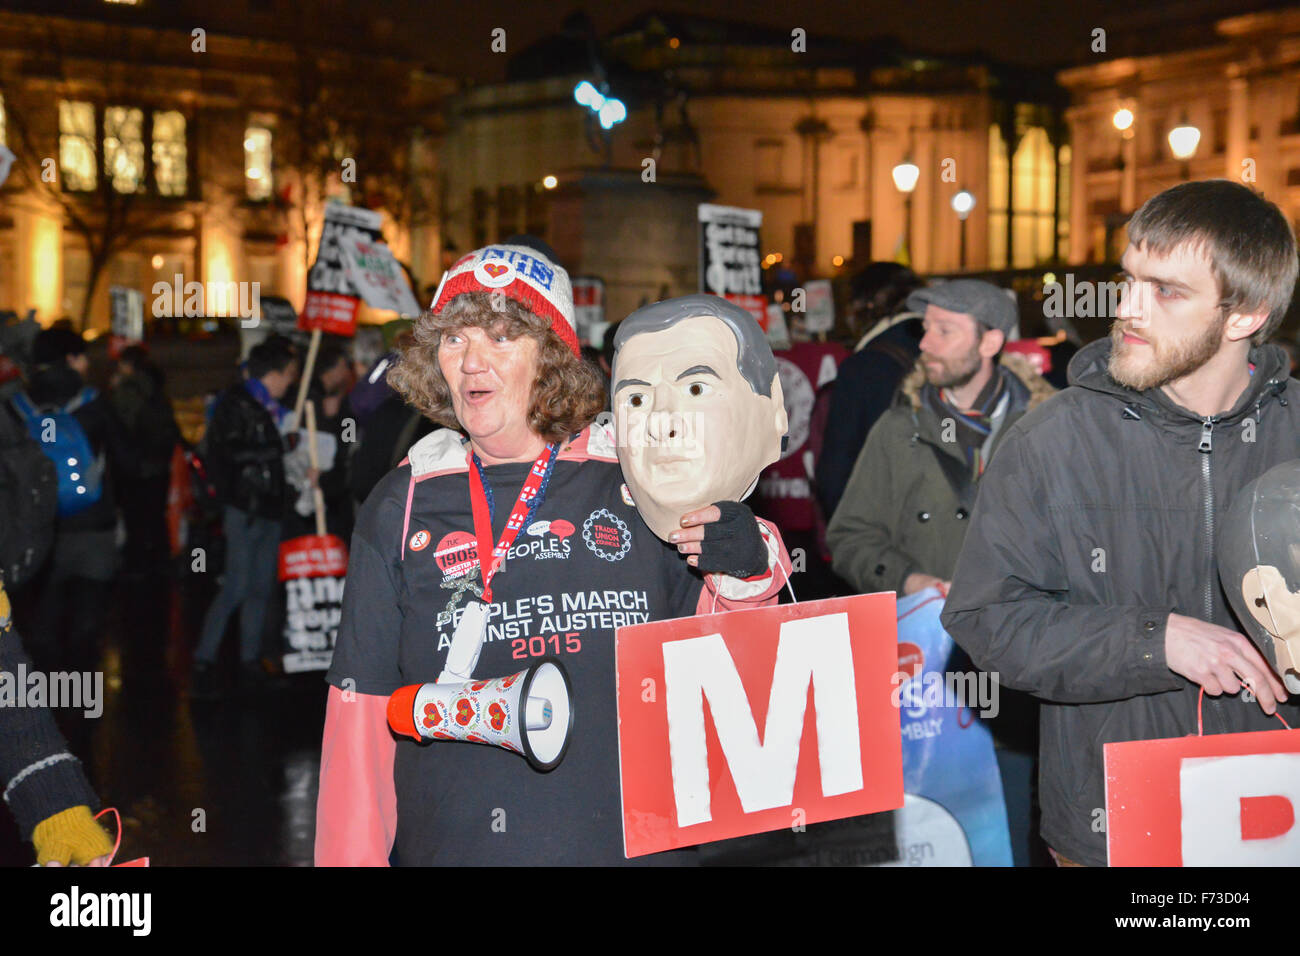 London, UK. 24th November 2015. Spending Review: protest Trafalgar Square  against George Osborne austerity cuts Stock Photo